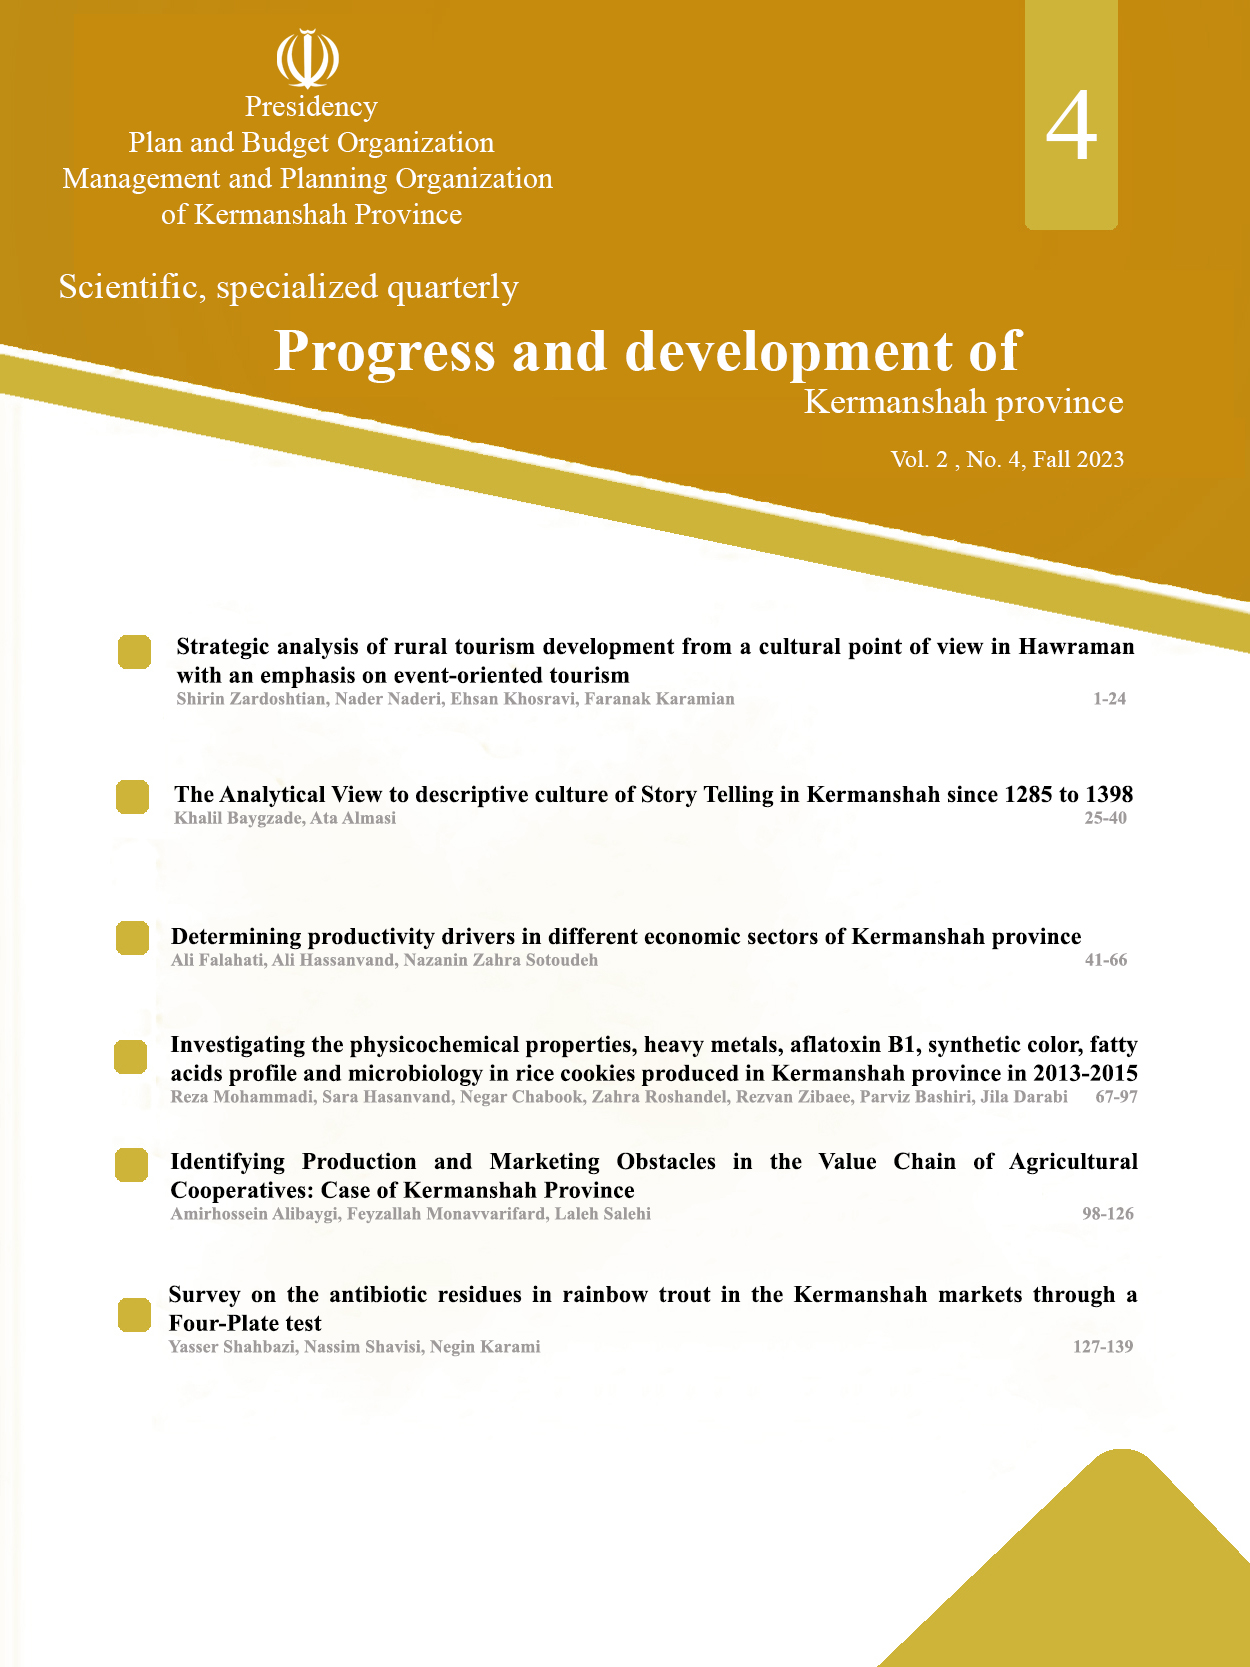 Progress and Development of Kermanshah Province